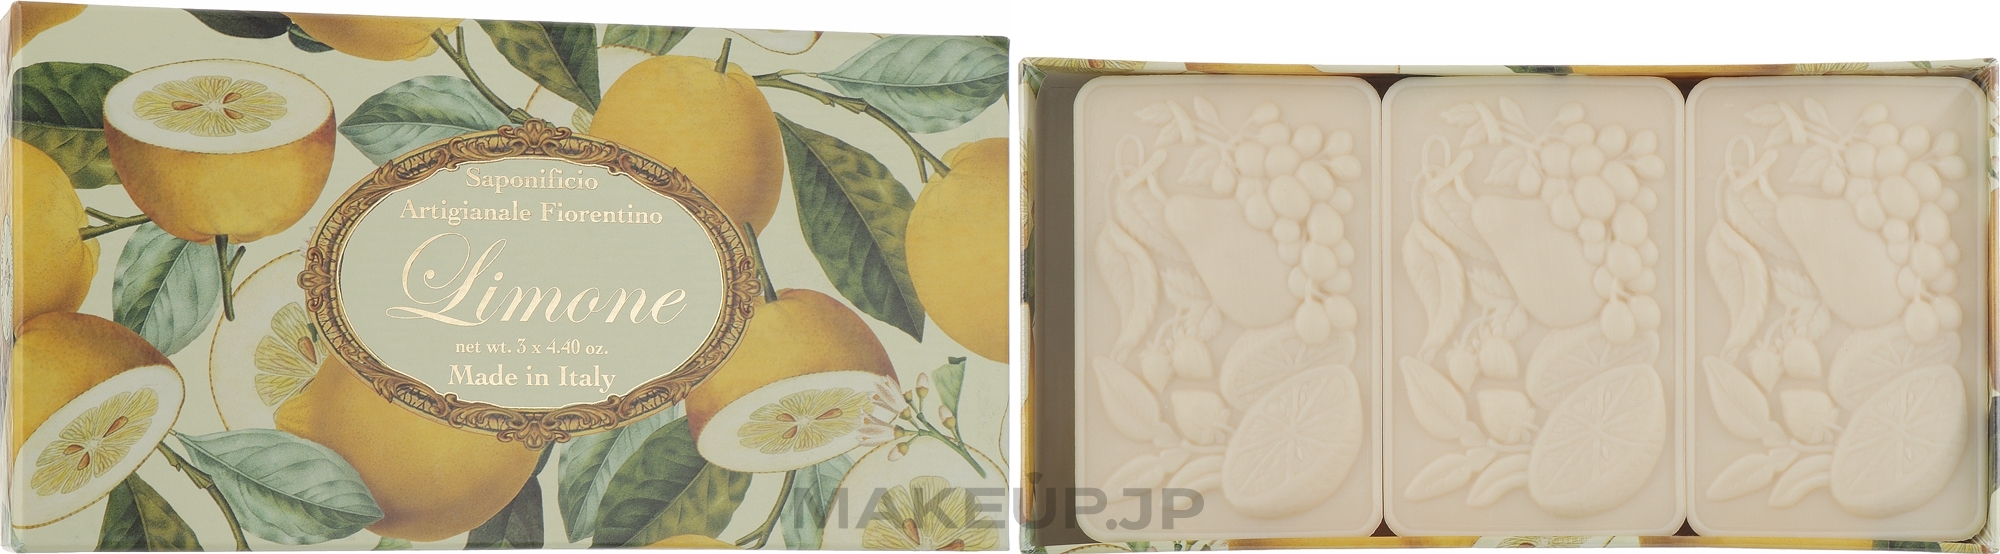 Toilet Soap Set "Lemon" - Saponificio Artigianale Fiorentino Lemon — photo 3 x 125 g